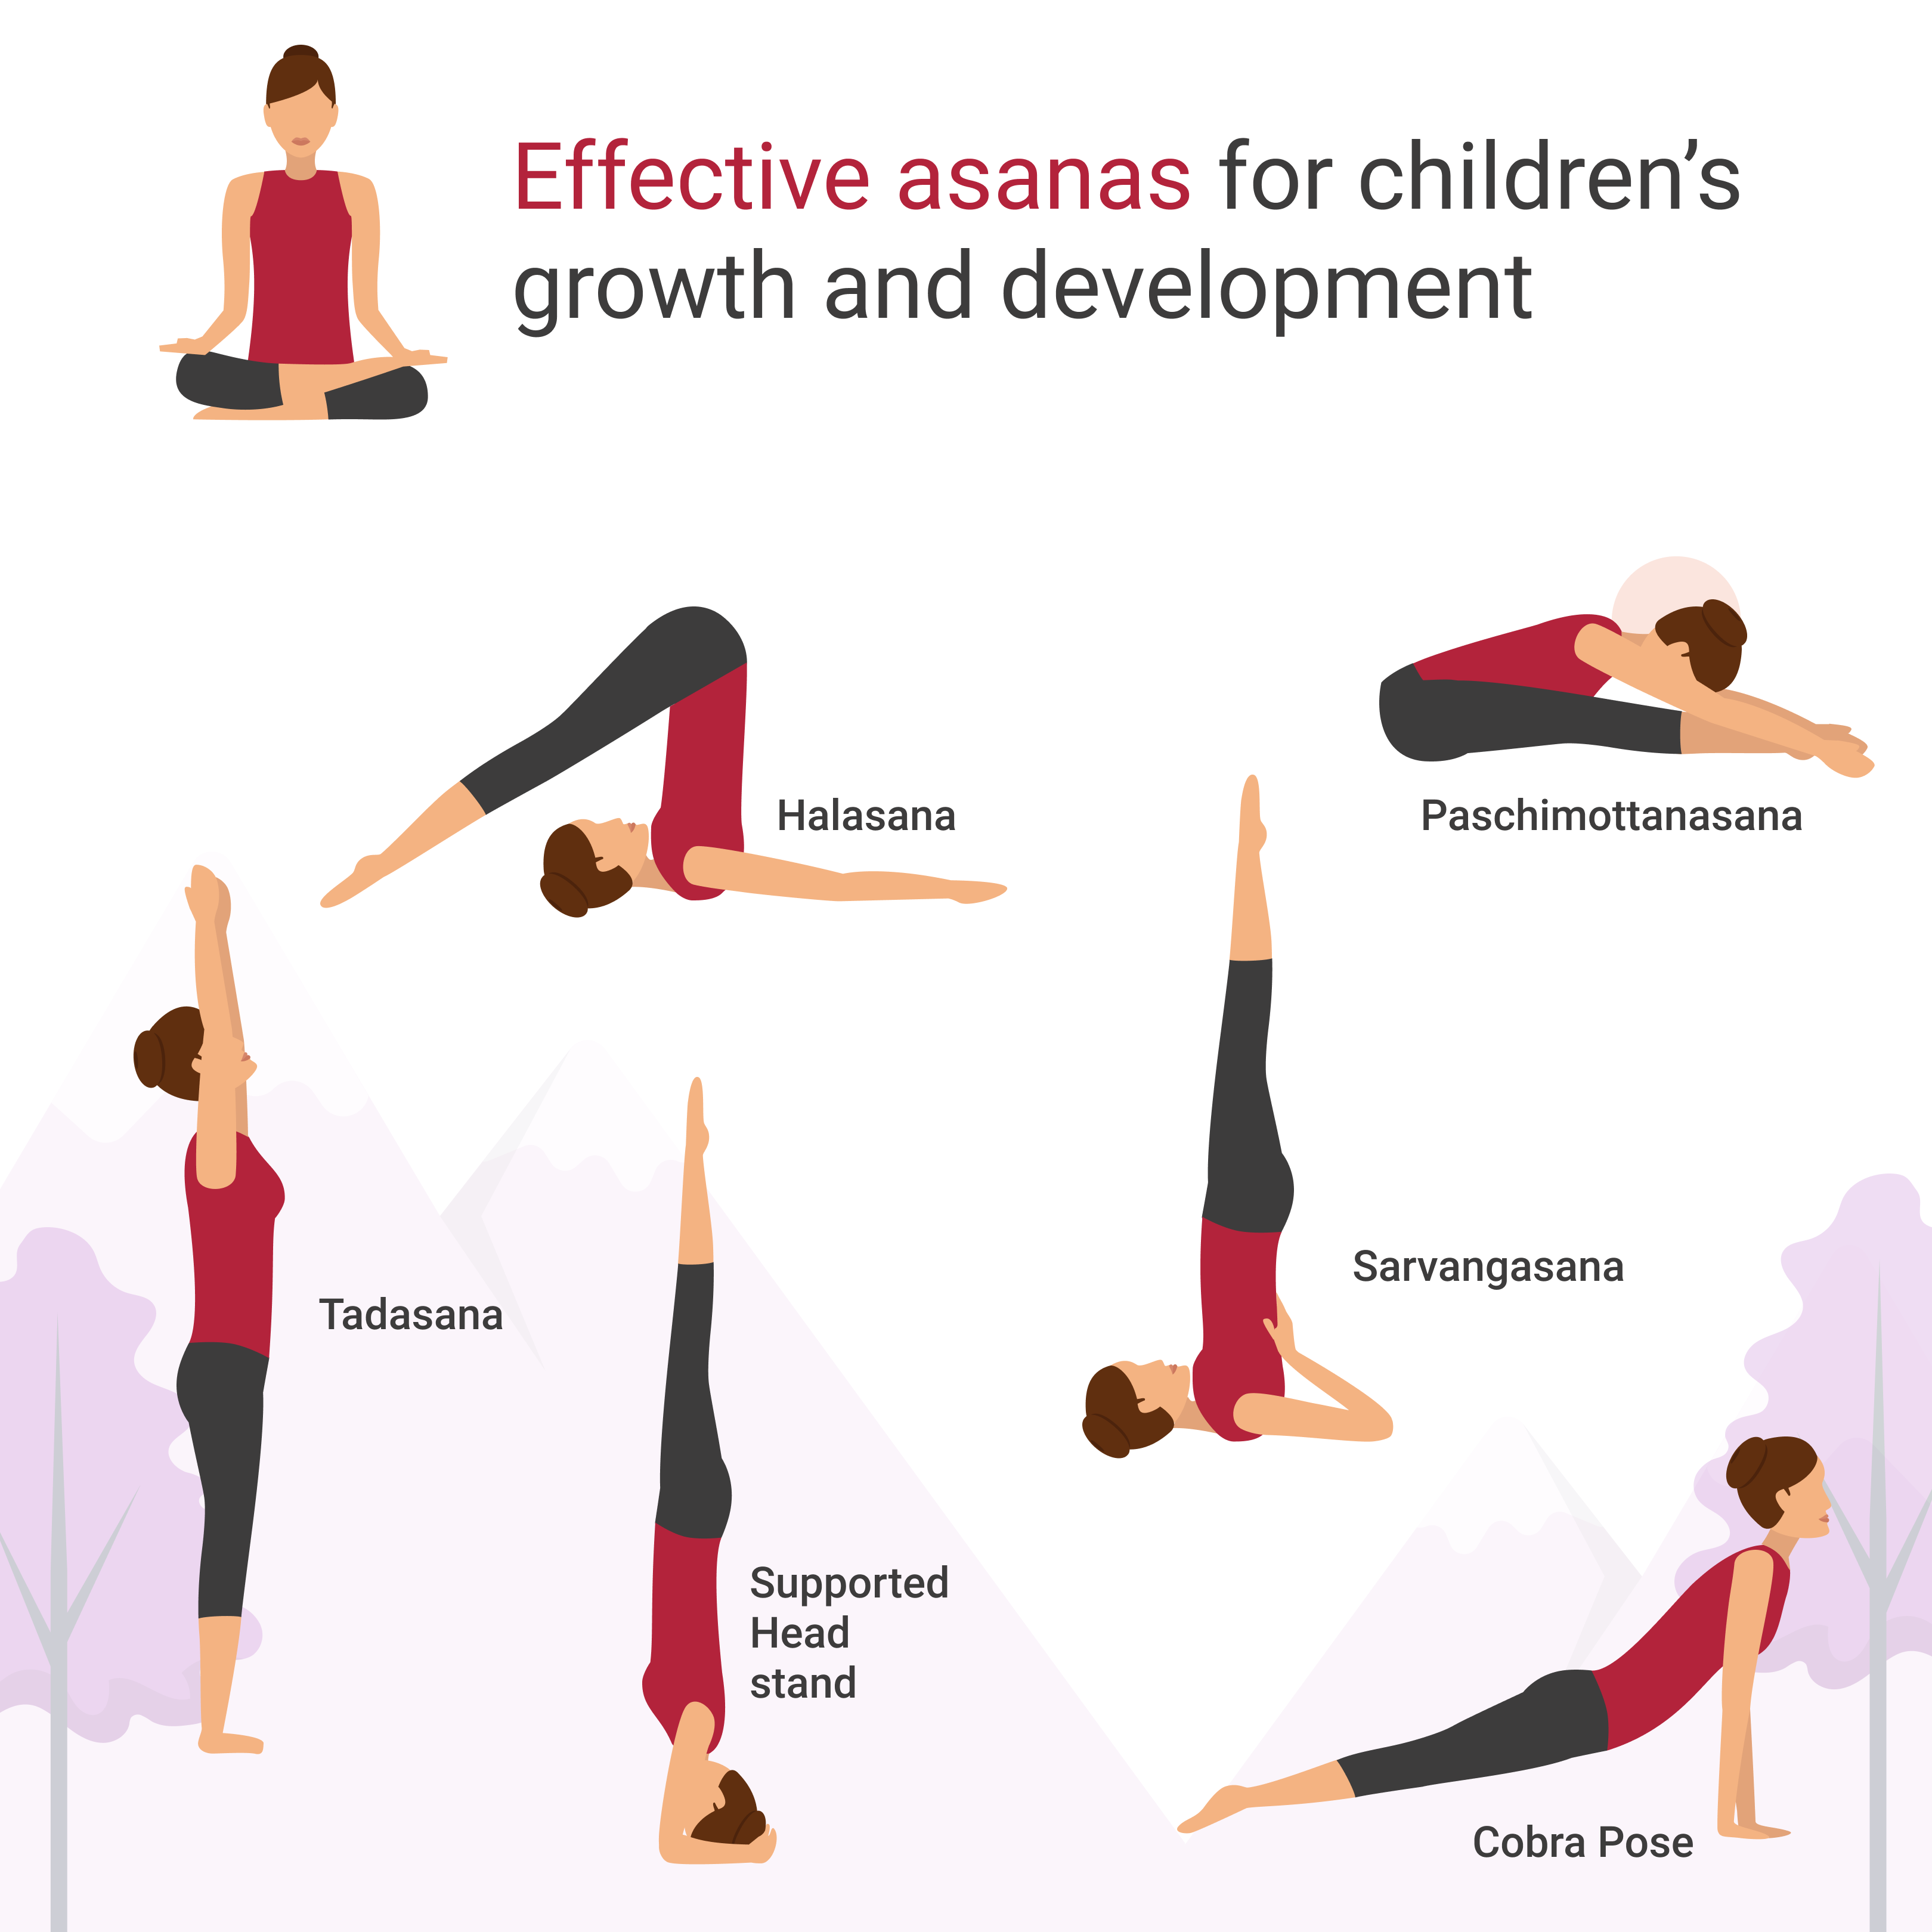 10 effective asanas for children’s growth and development